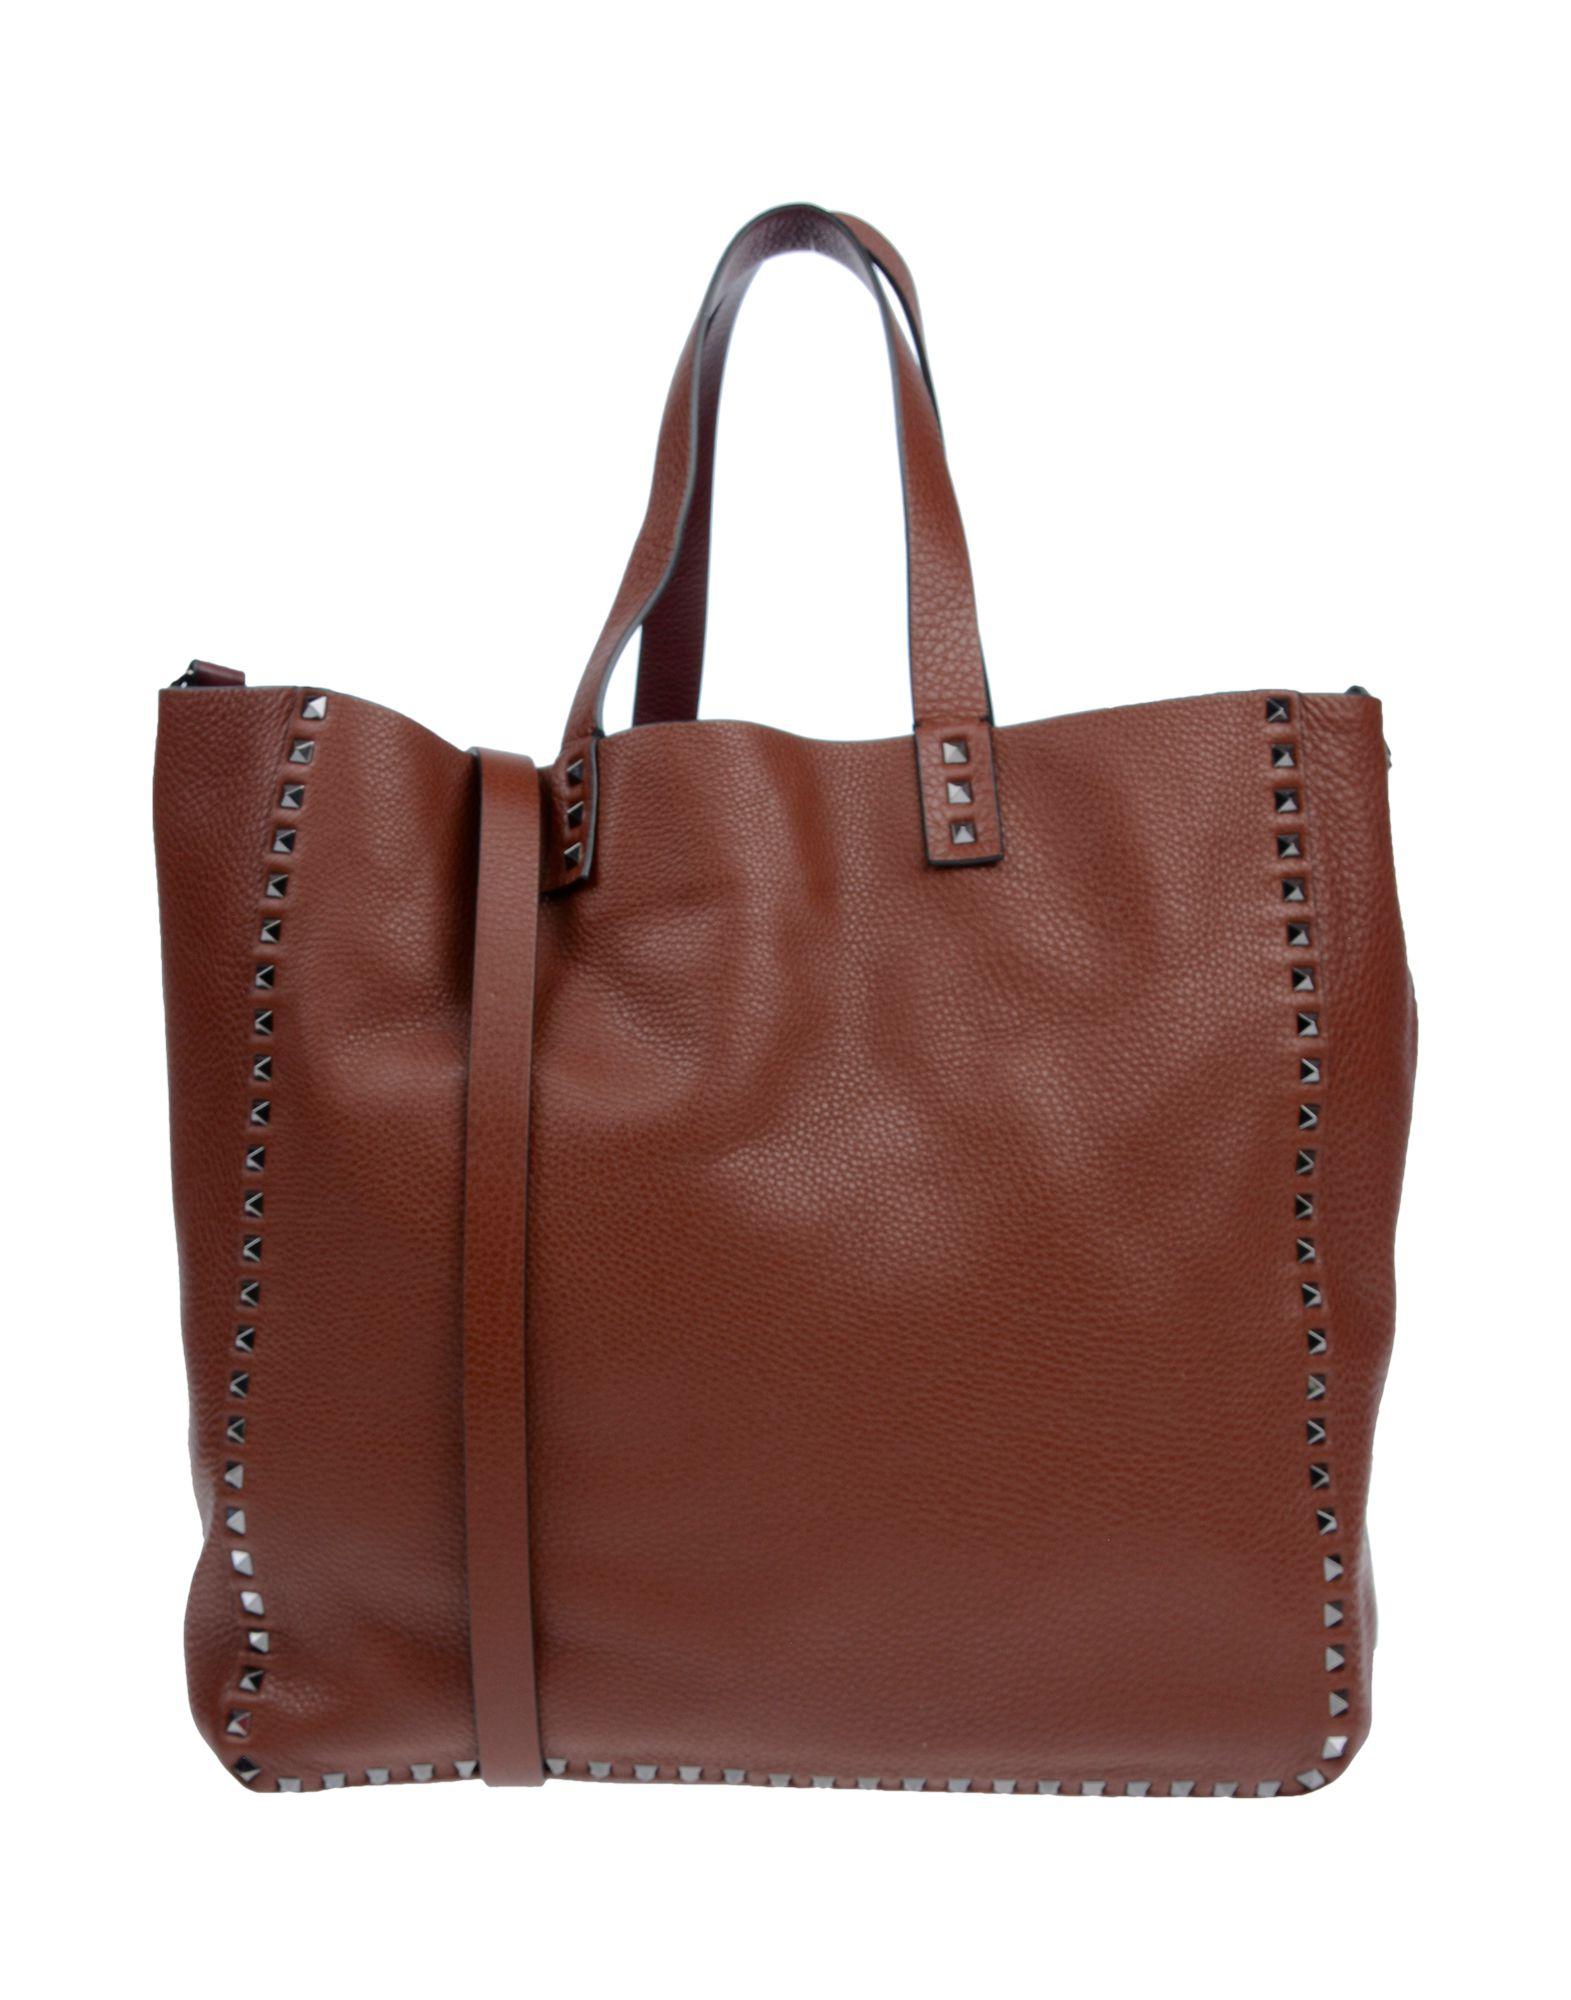 Valentino Garavani Handbag in Brown - Lyst